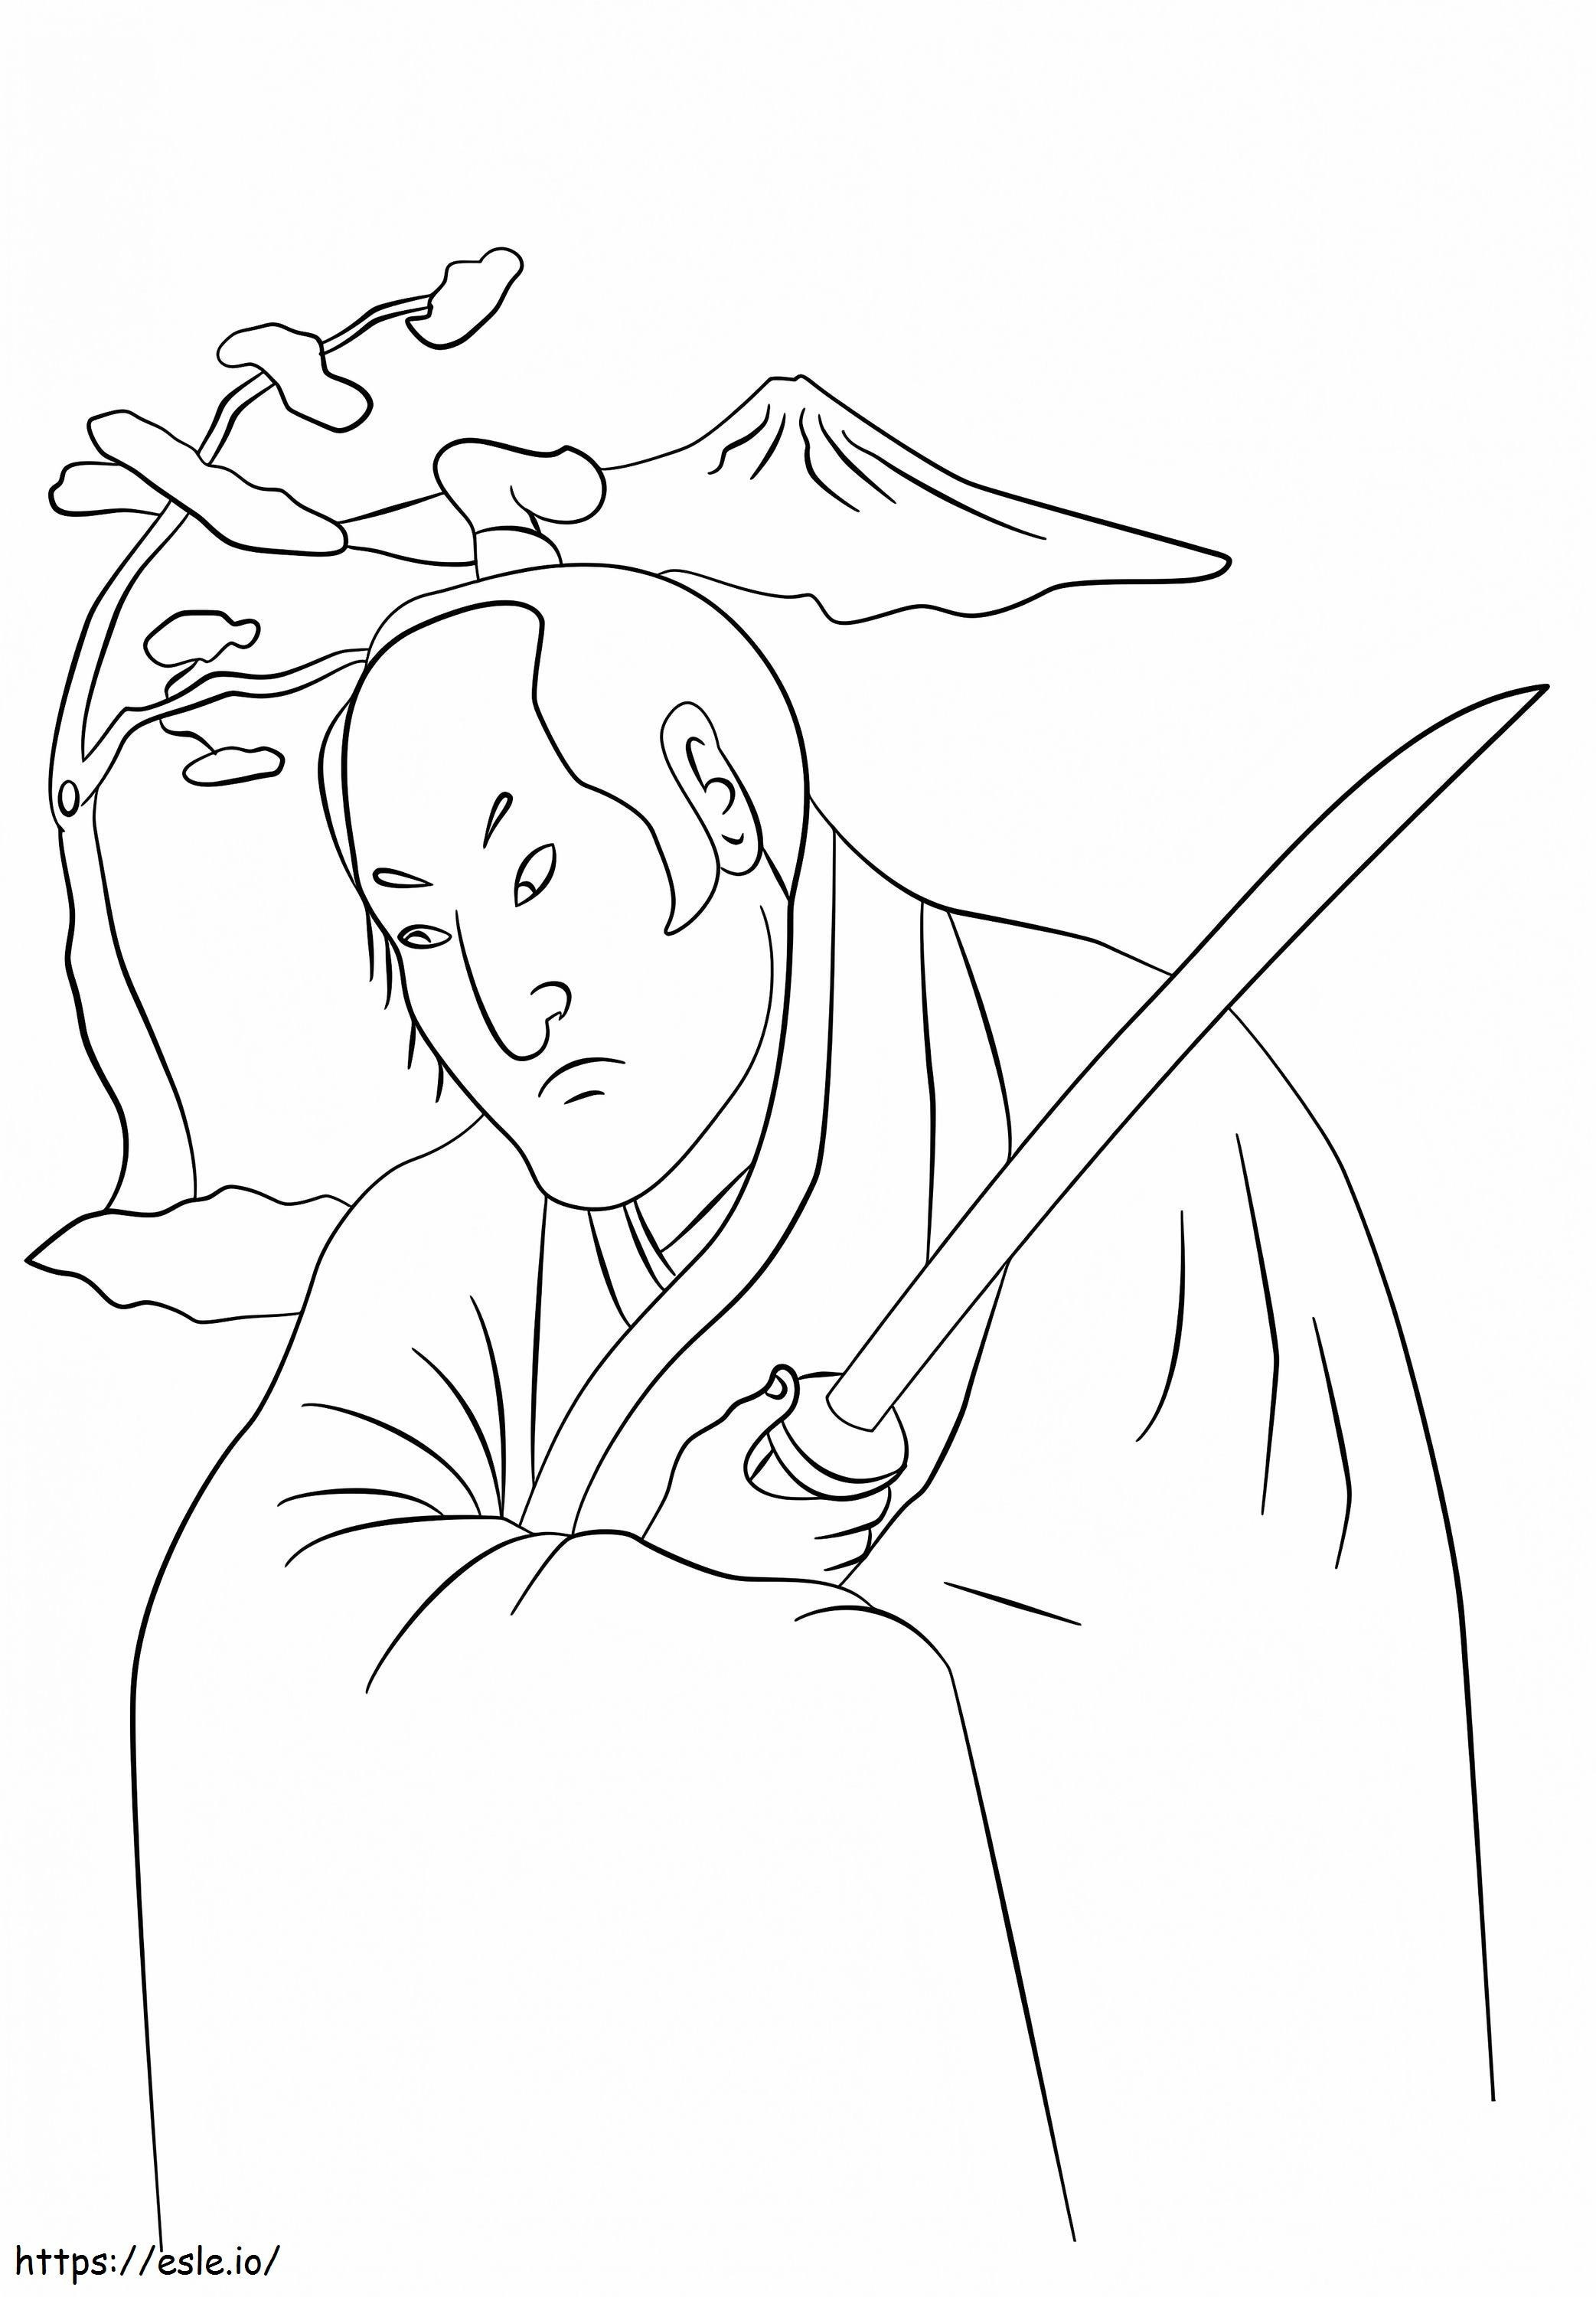 Samurajski wojownik kolorowanka